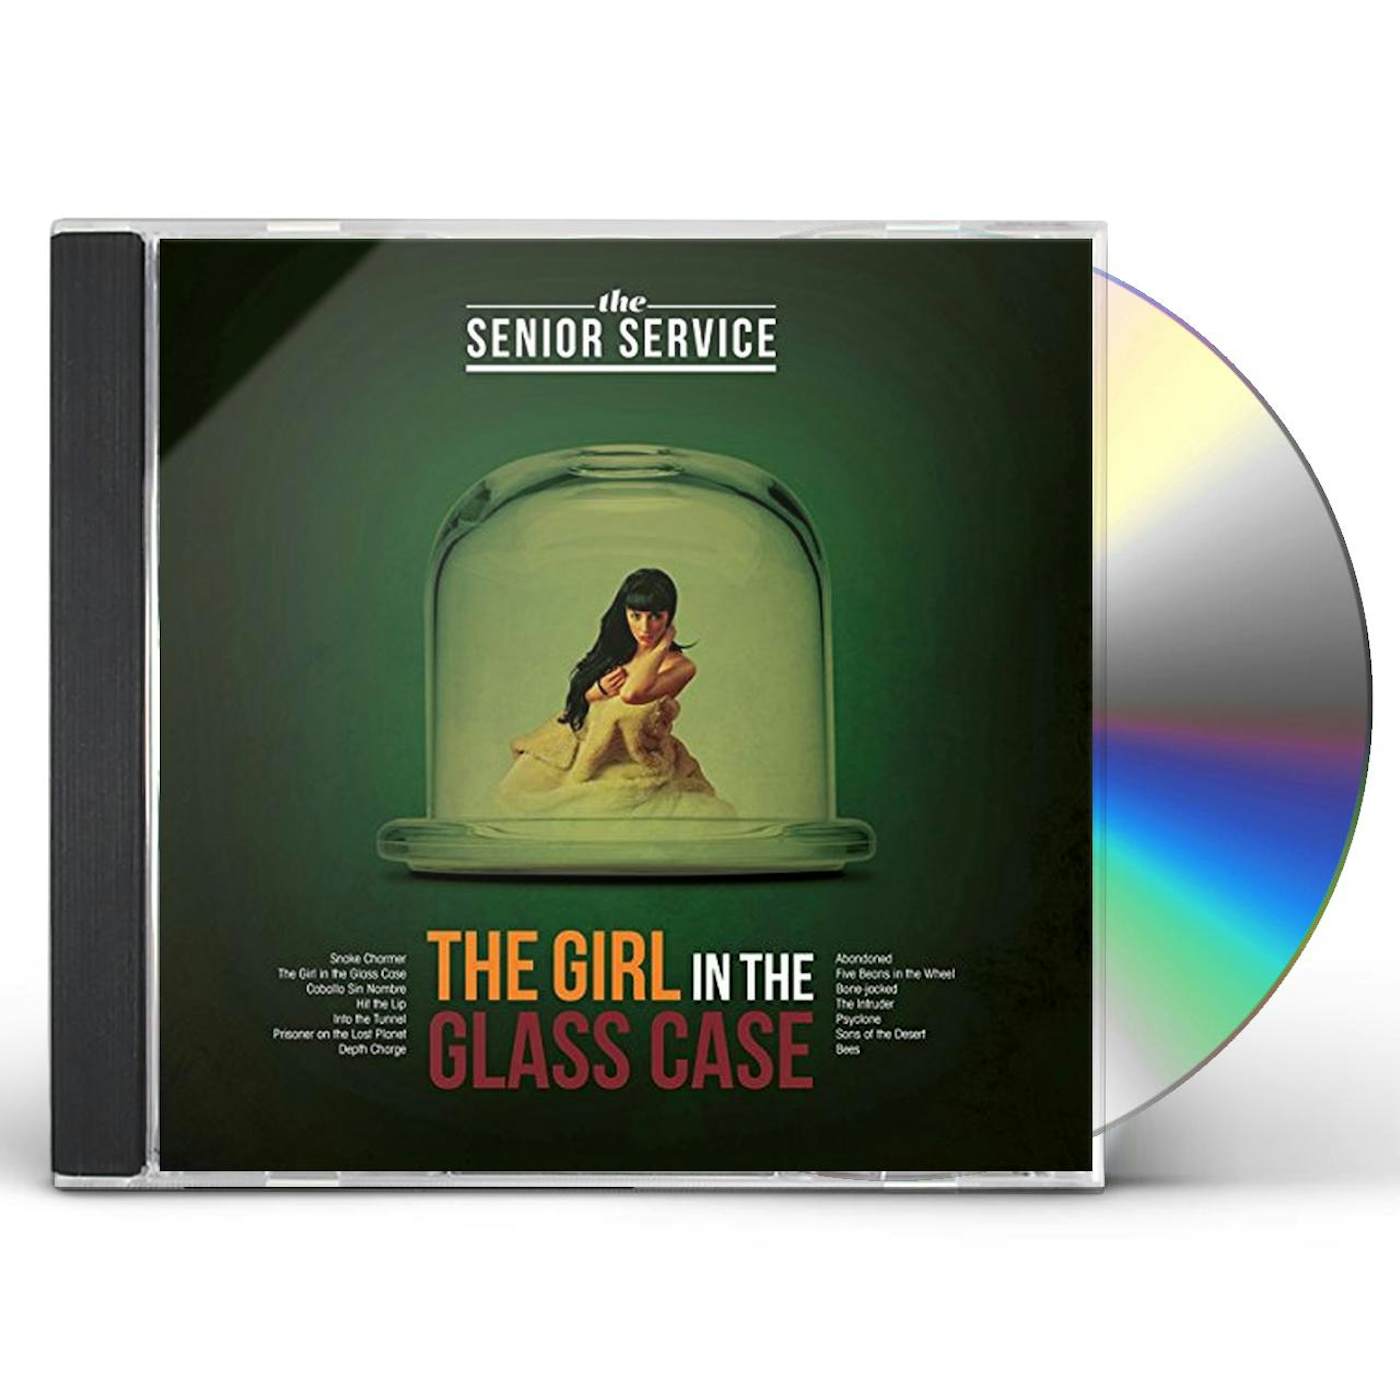 The Senior Service GIRL IN THE GLASS CASE CD